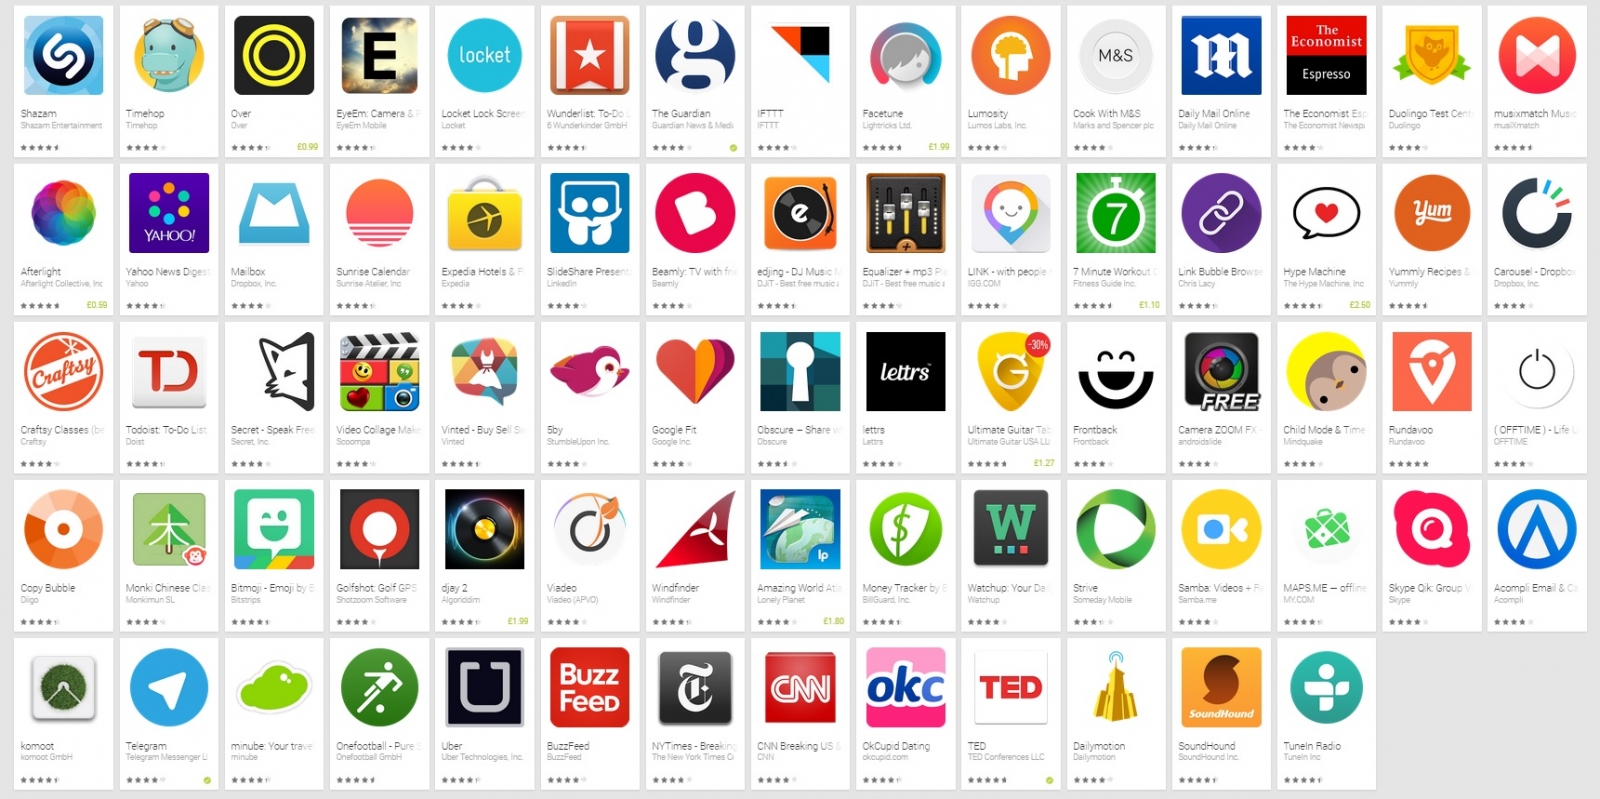 Top 50 best dating apps